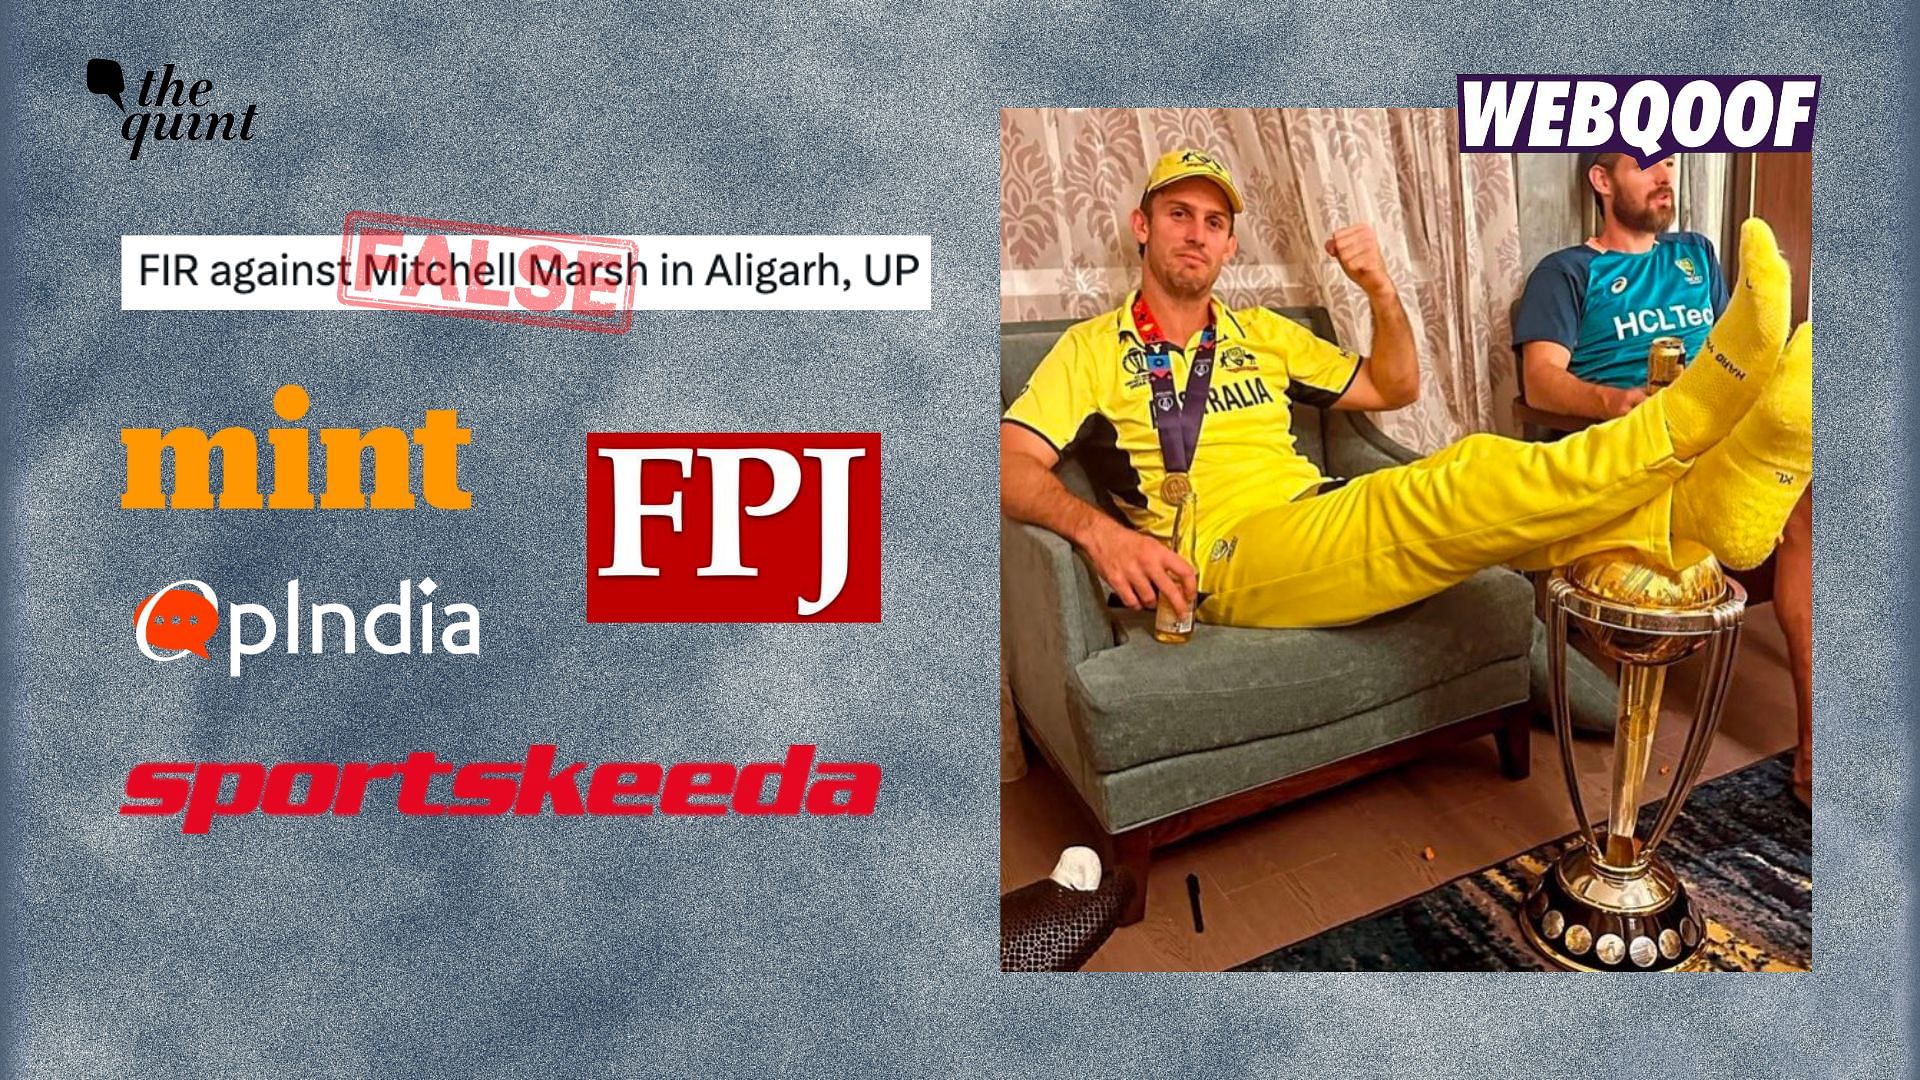 <div class="paragraphs"><p>Several media companies misreported that a FIR was filed against<em>&nbsp;</em>Australian cricket Mitchell Marsh in Aligarh, Uttar Pradesh.</p></div>